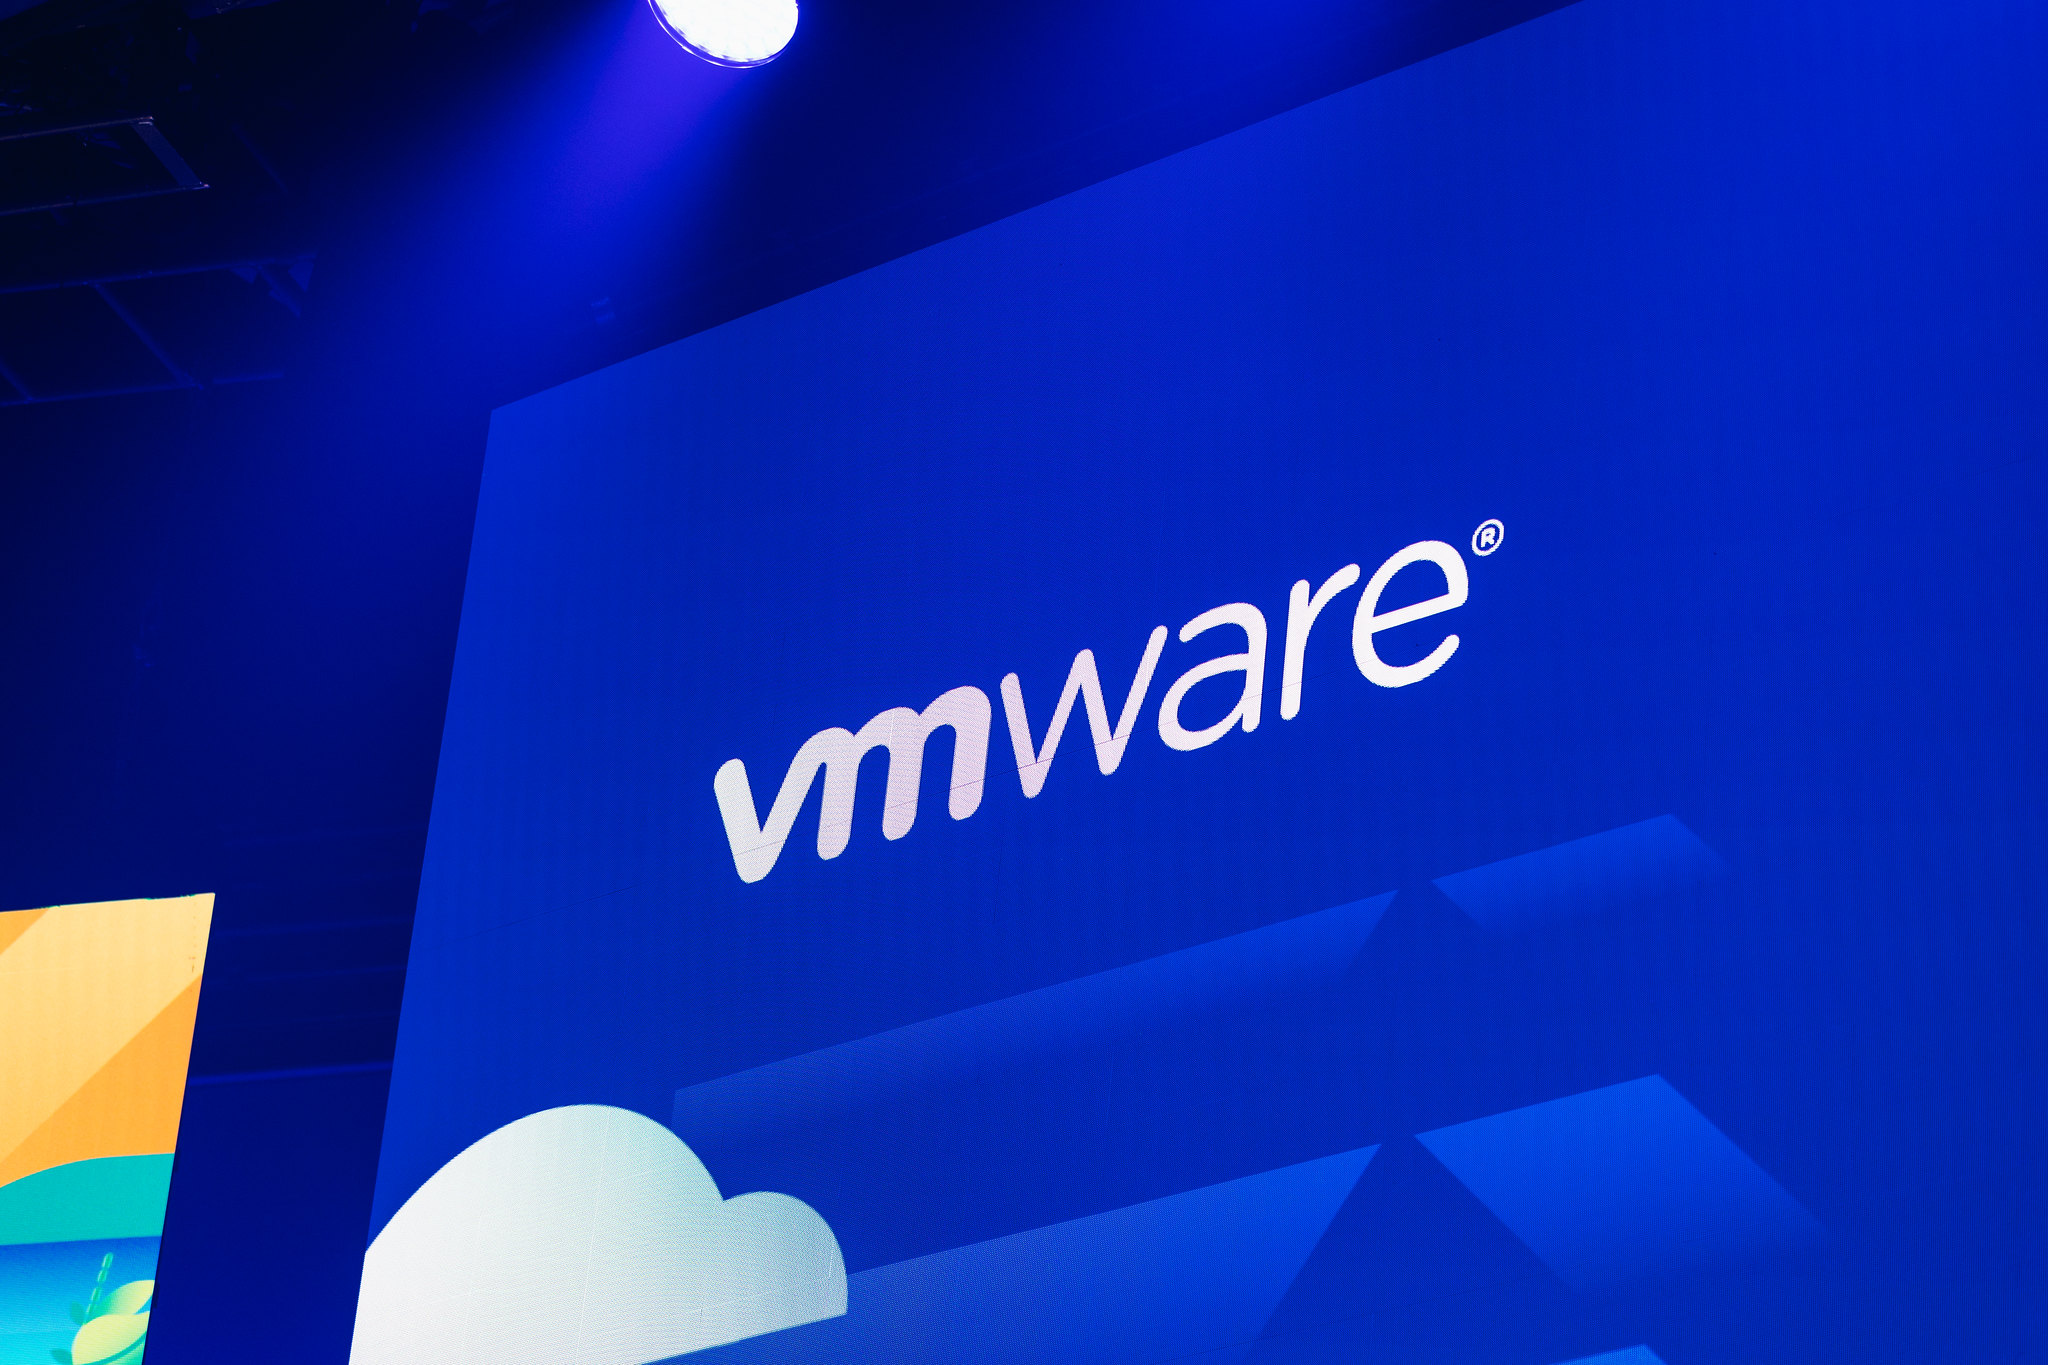 VMware Cloud เพิ่มความทันสมัย ปรับปรุงประสิทธิภาพ ให้การปกป้องที่ดียิ่งขึ้น พร้อมนำเสนอฟีเจอร์และเทคโนโลยีที่เหนือชั้นสำหรับองค์กรที่ใช้มัลติคลาวด์